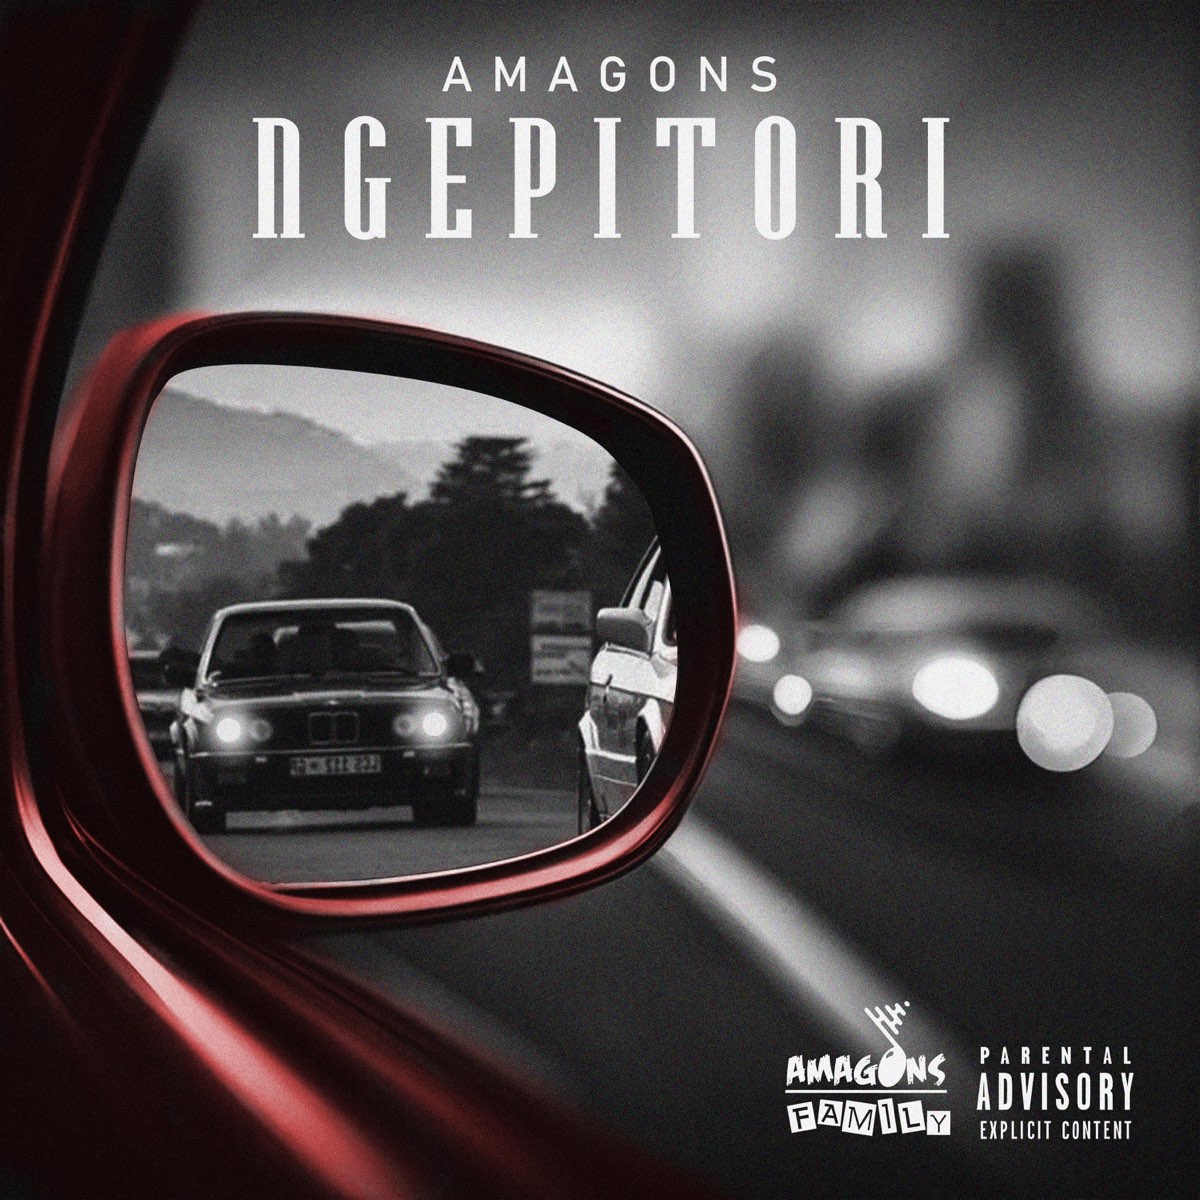 ‎NgePitori - Single - Album by Amagons Family - Apple Music